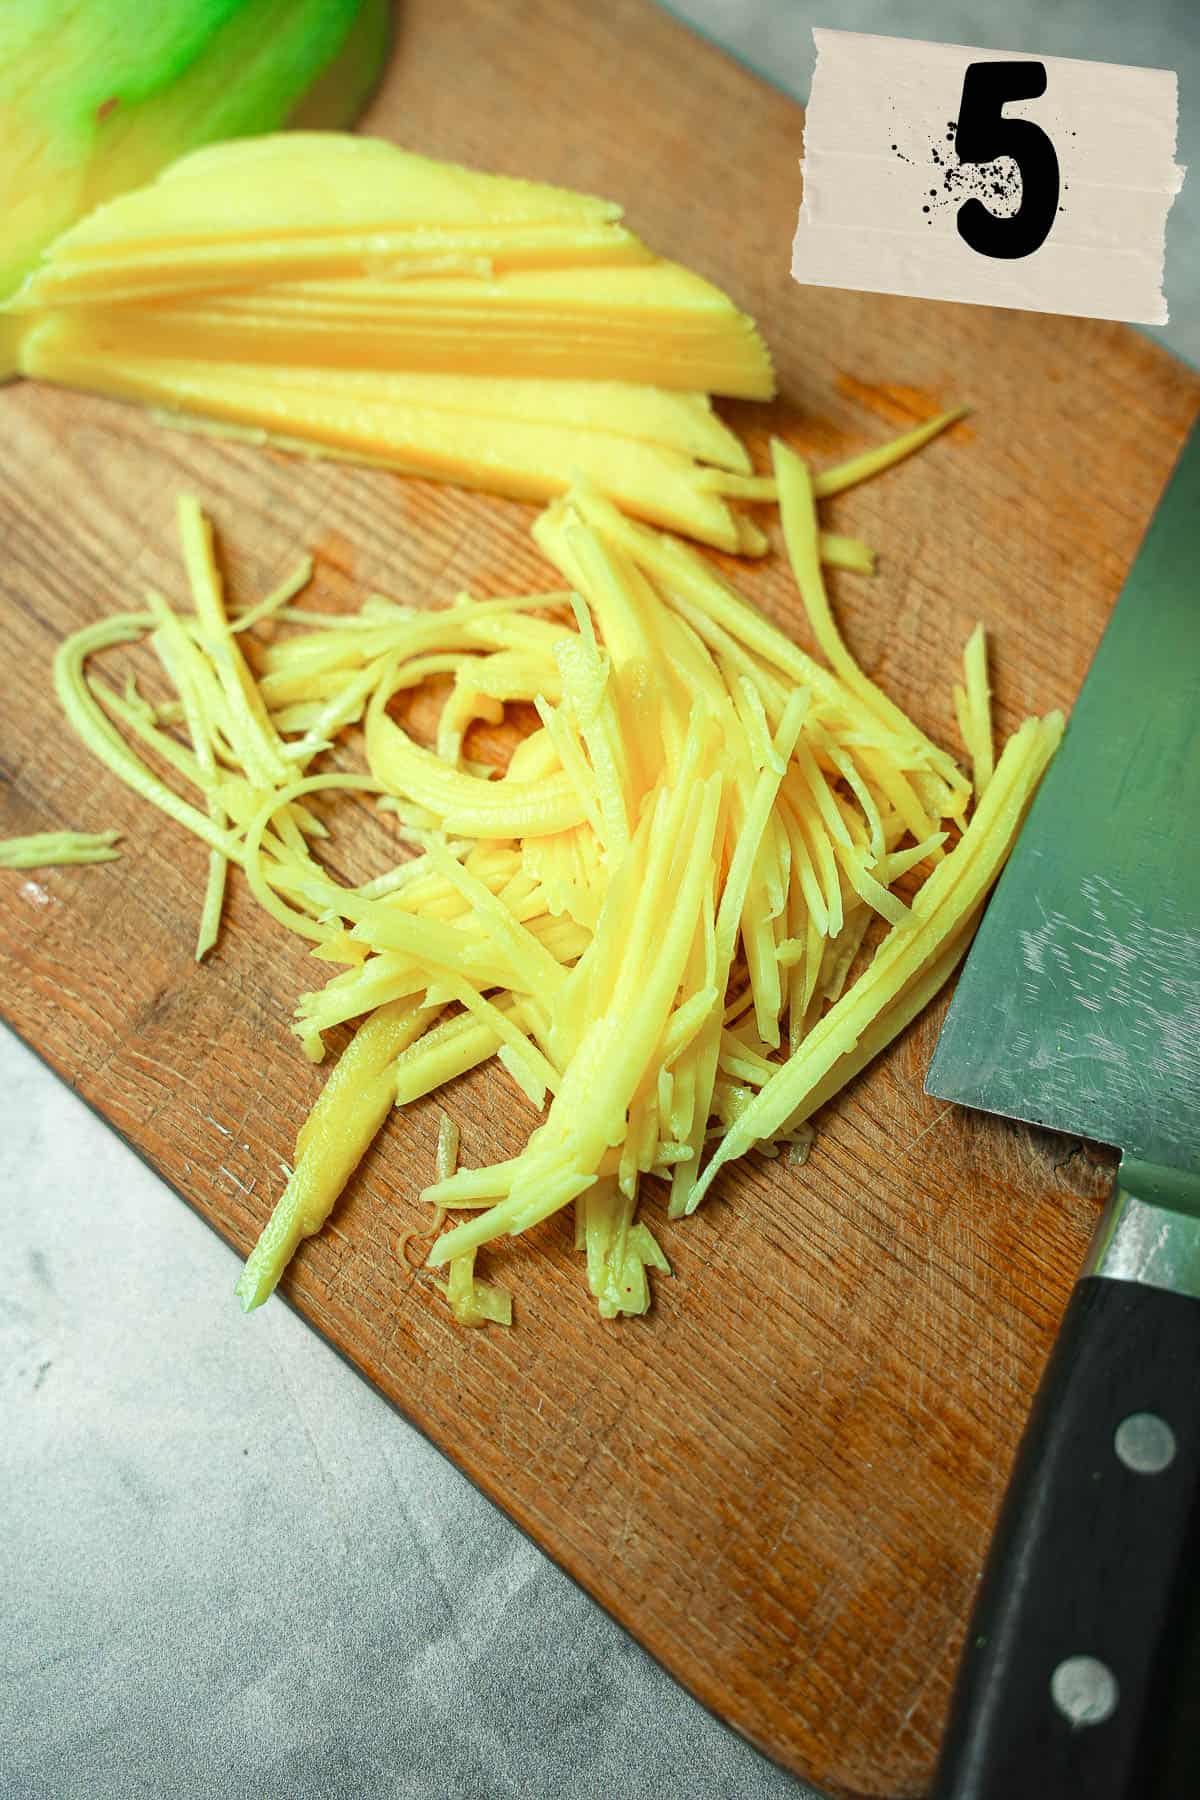 Julienne cut green mango with a knife on a cutting board.